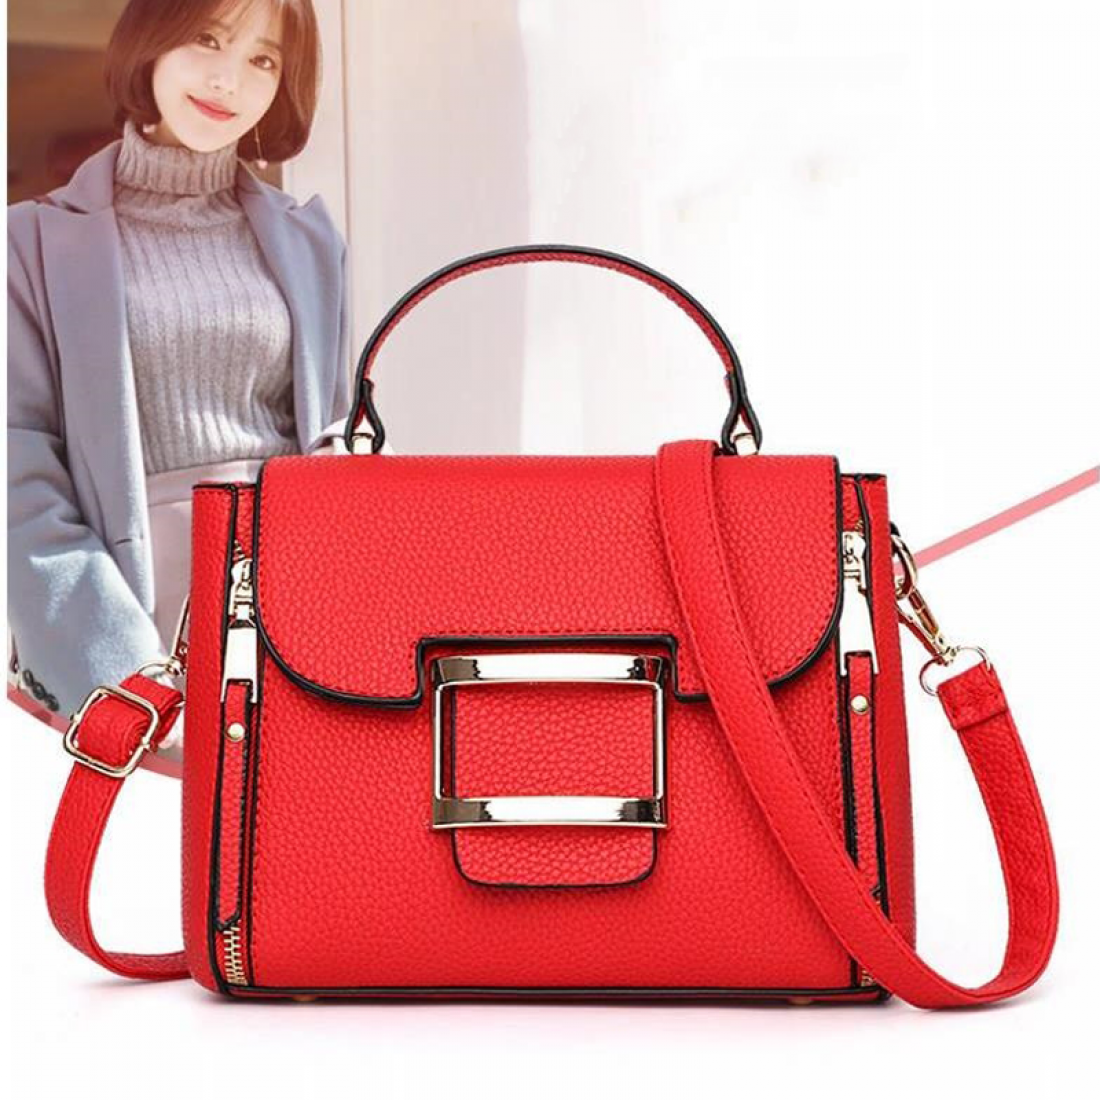 Buy Lychee Pattern Red Cross-Border Handbag WB-42RD | Fashion ...